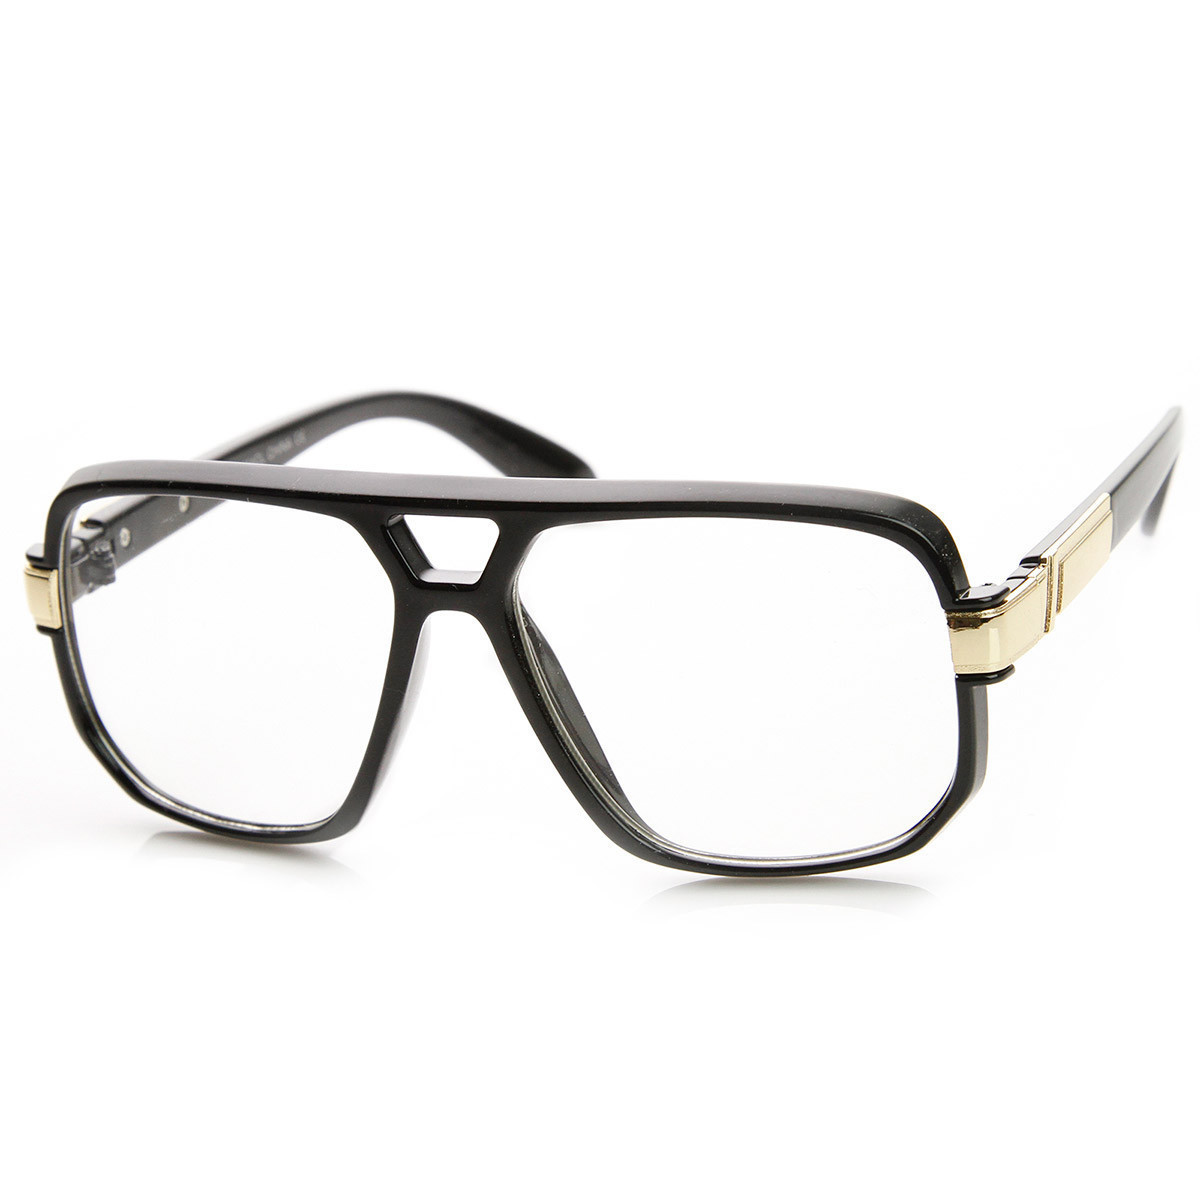 Classic Square Frame Plastic Clear Lens Aviator Glasses - 8975 - Black Gold